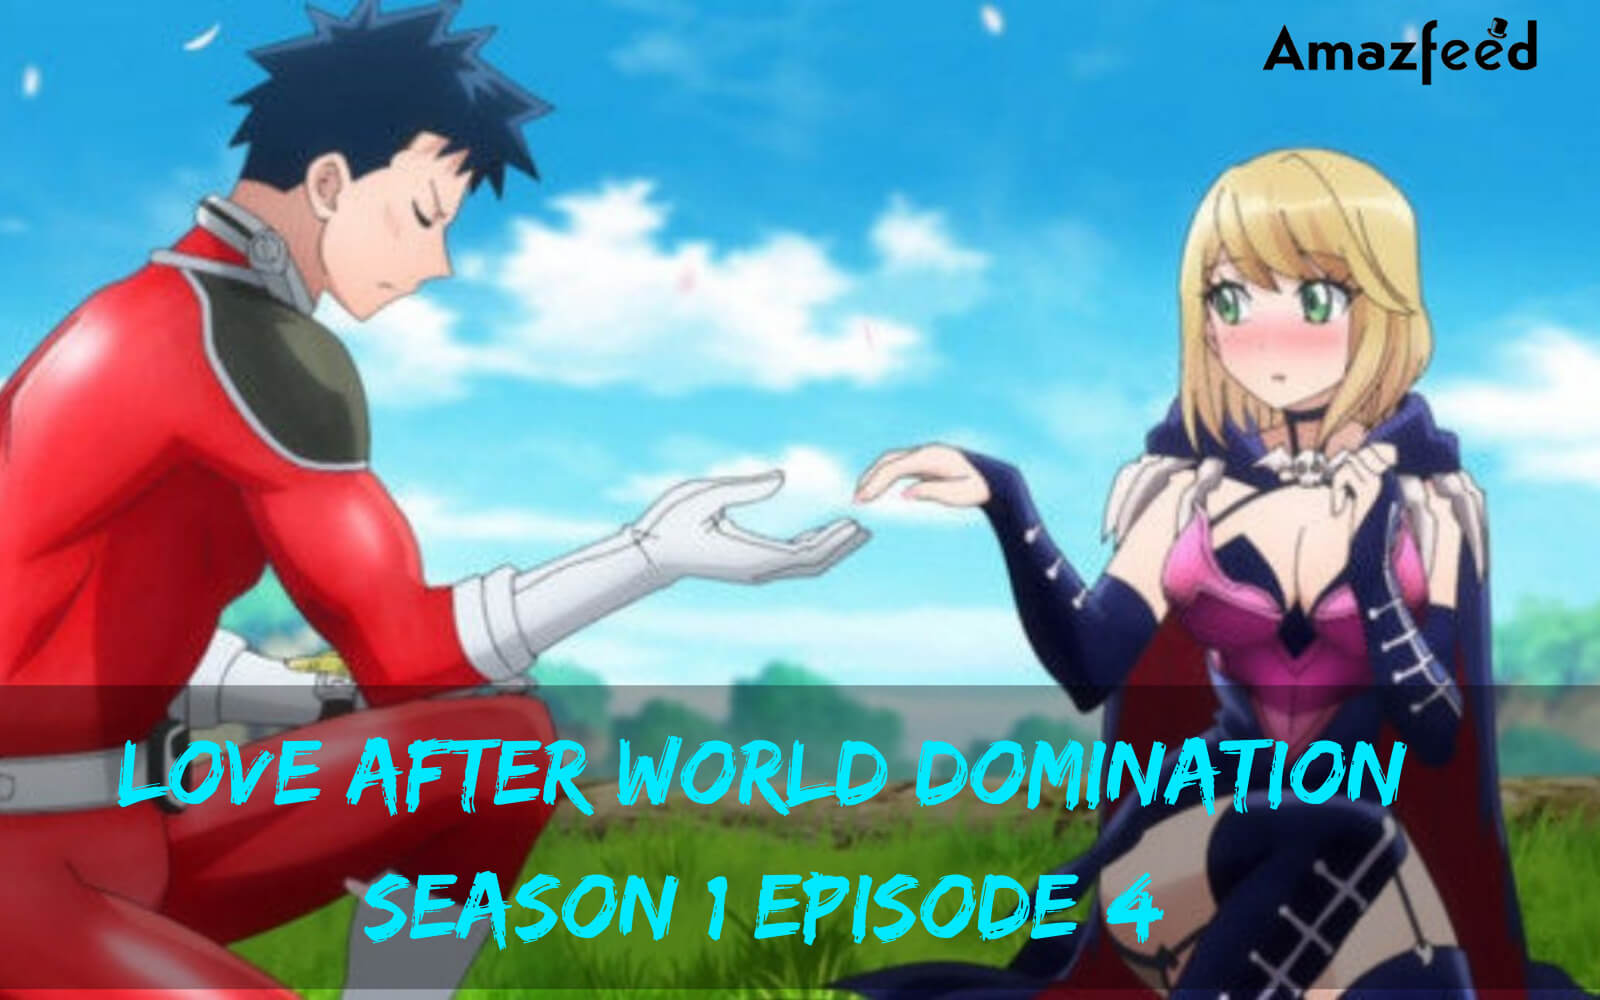 Love After World Domination Season 1 episode 4 release date